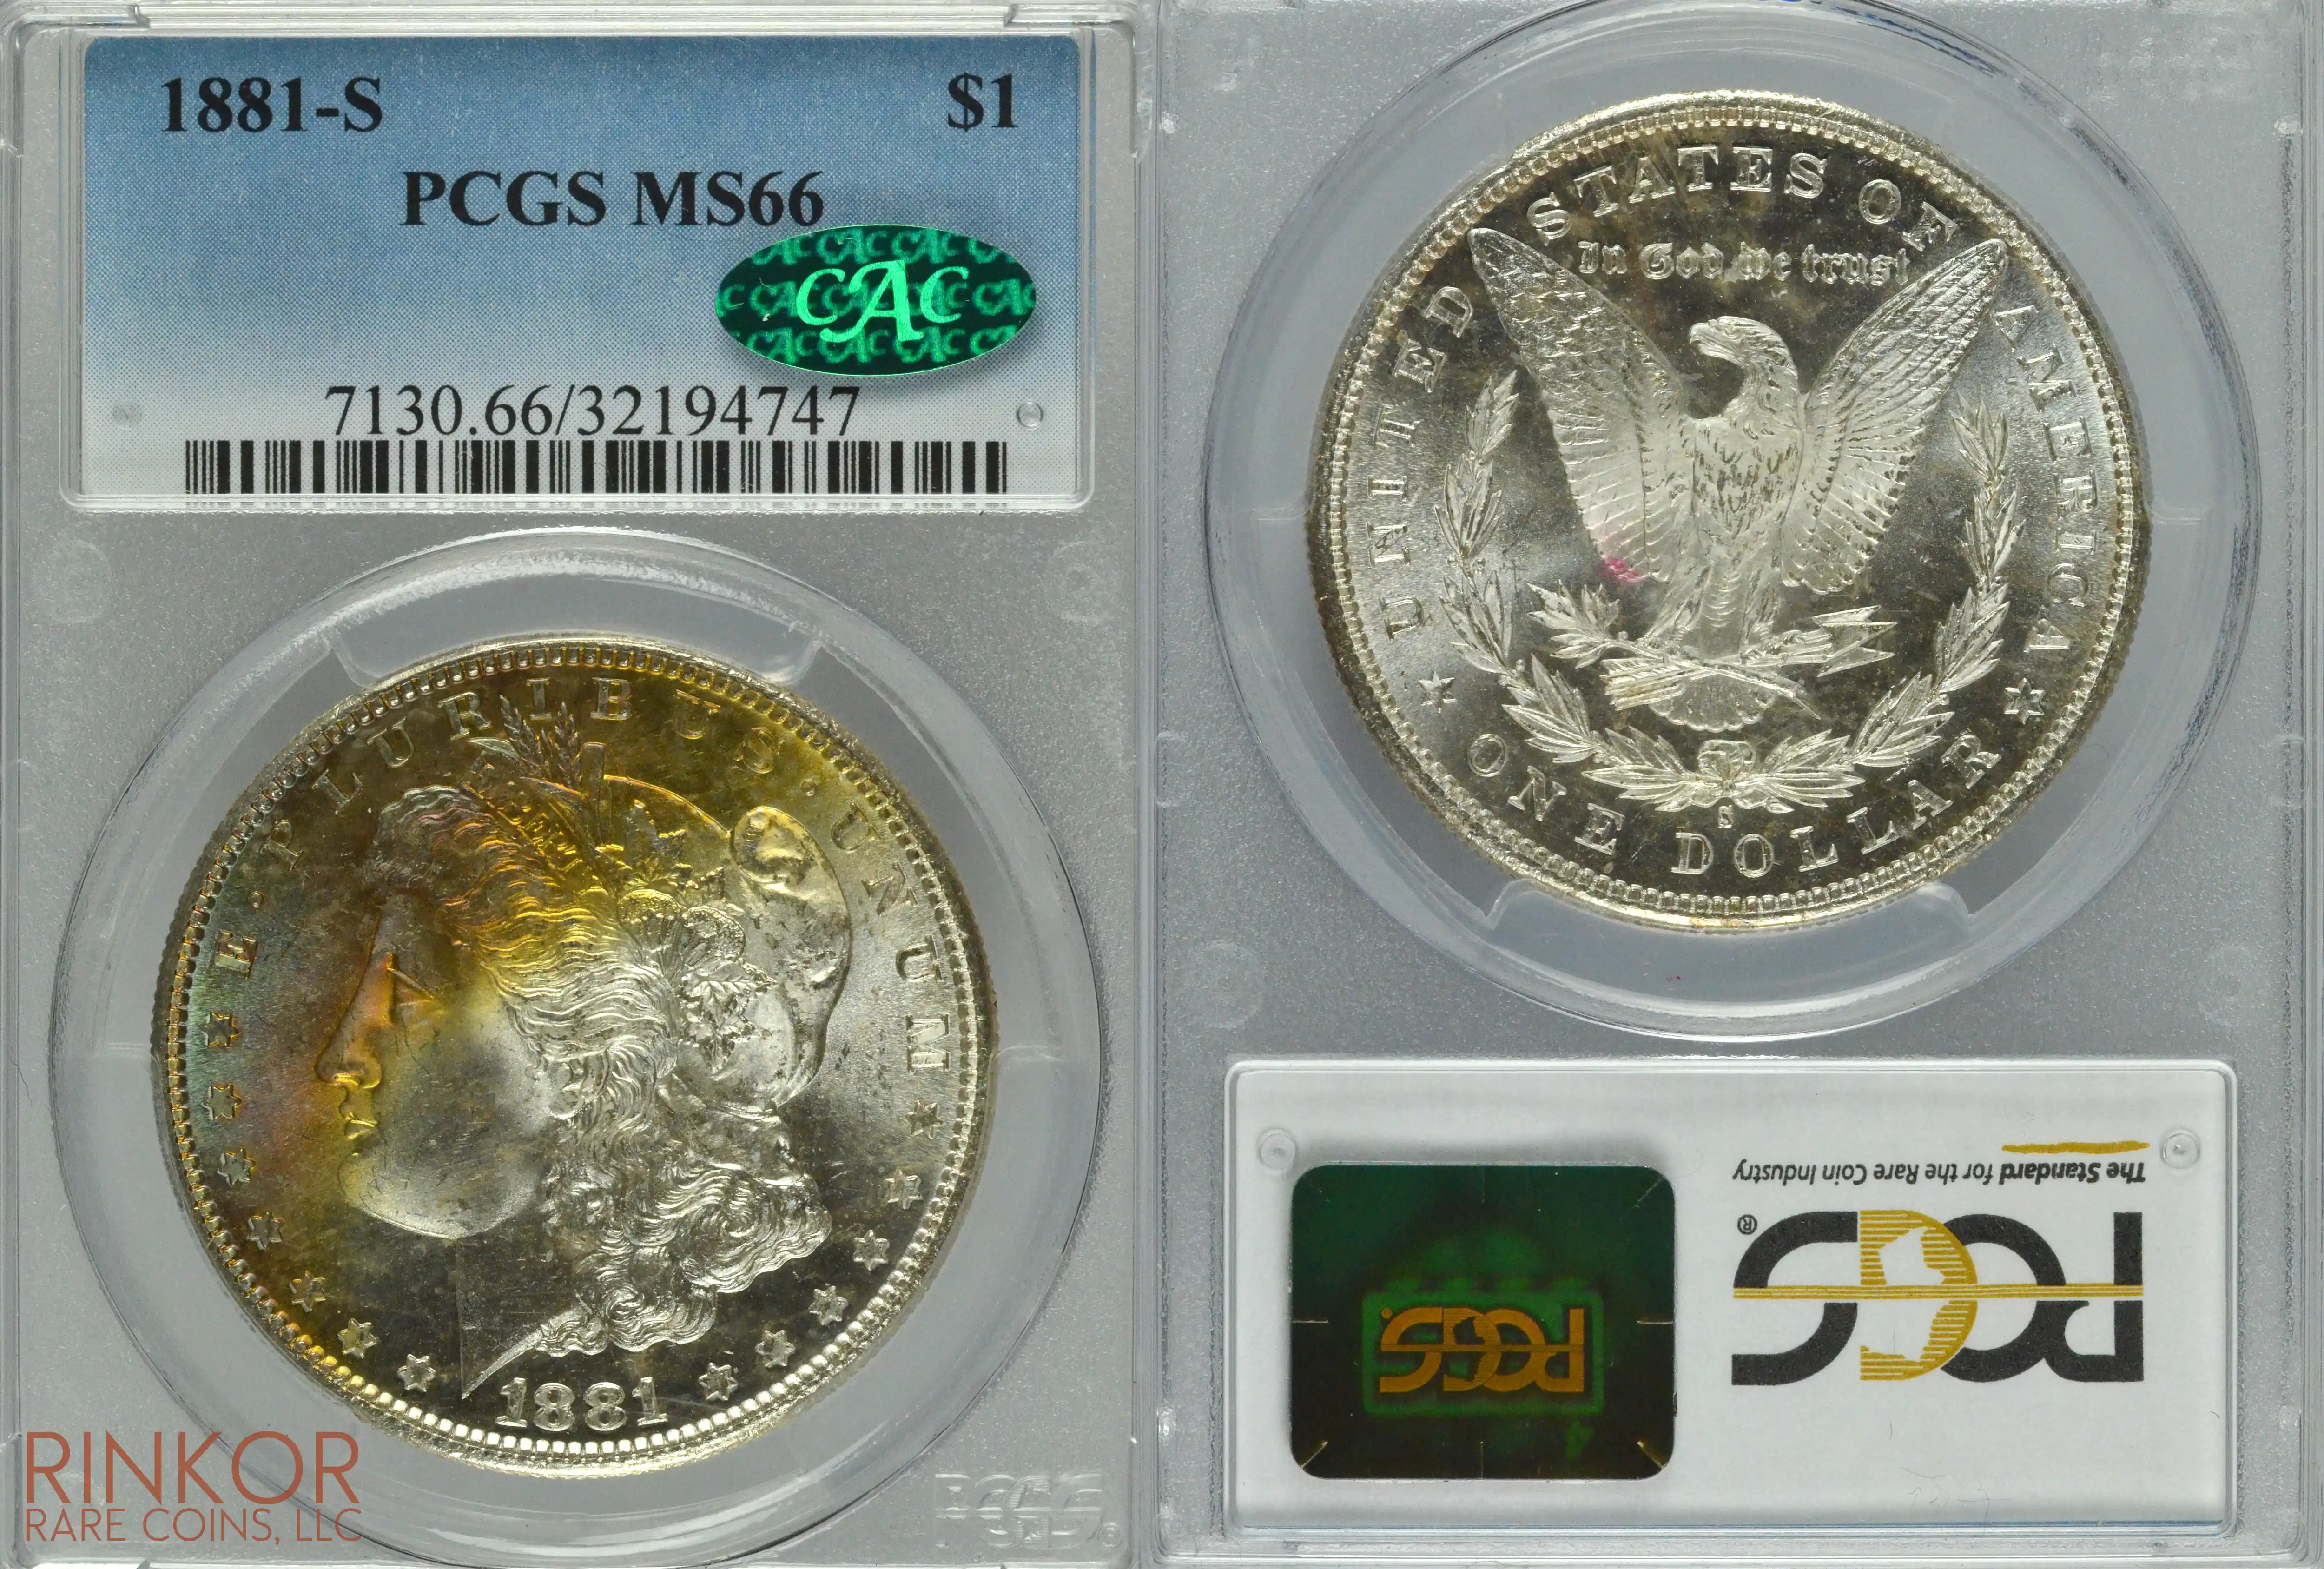 1881-S $1 PCGS MS 66 CAC